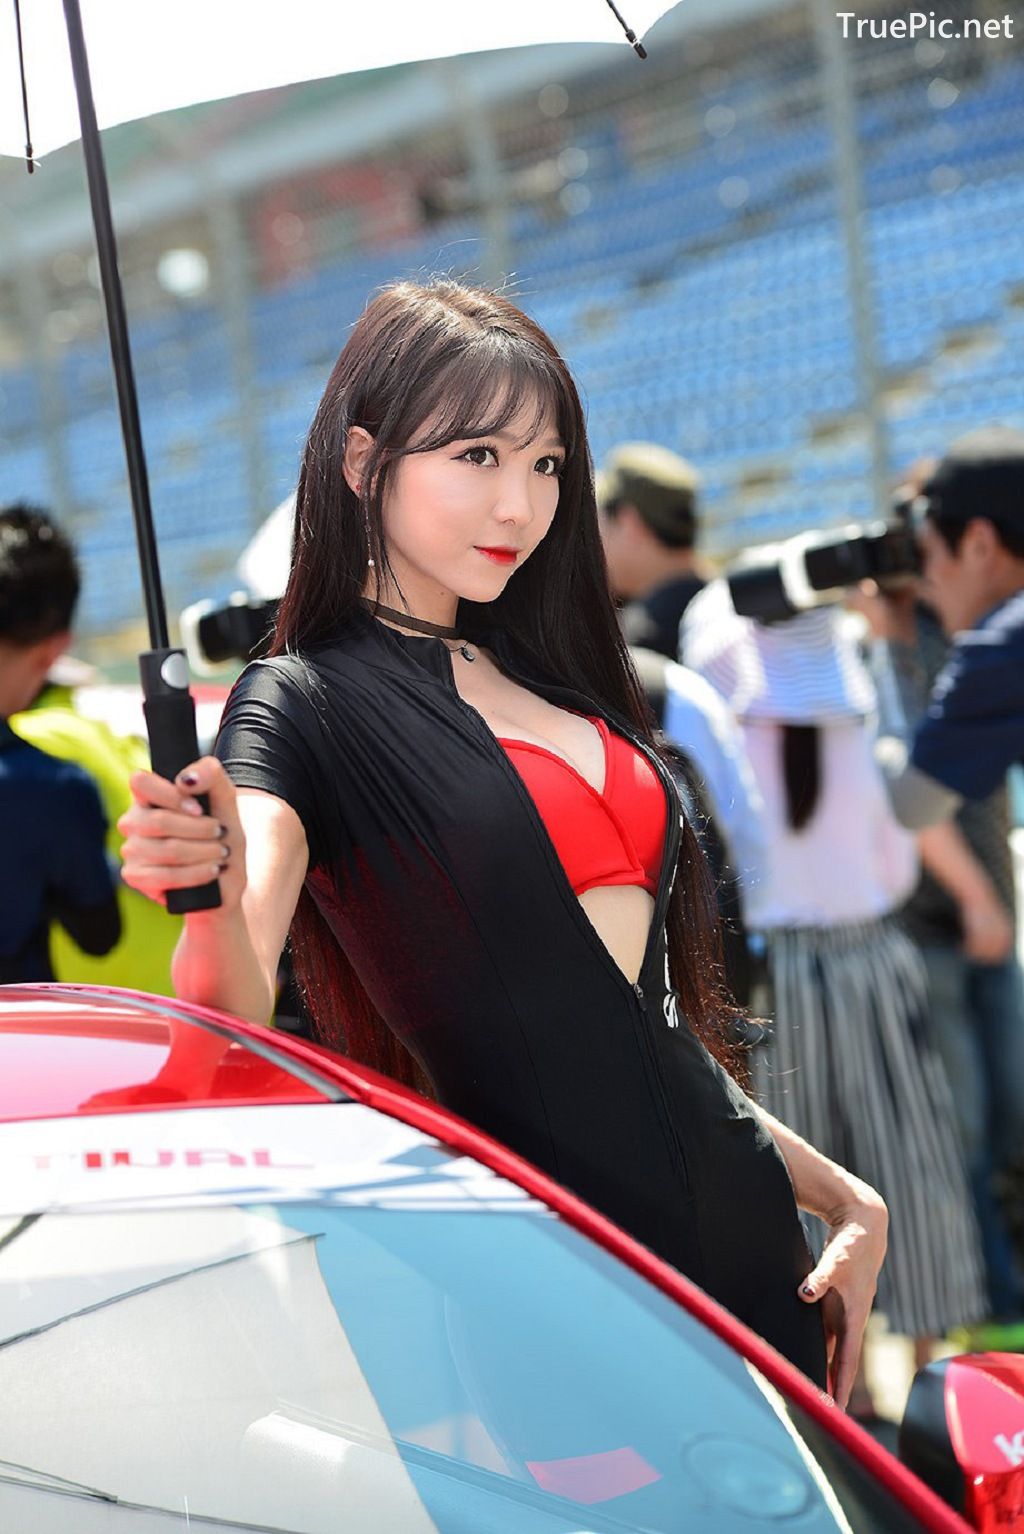 Image-Korean-Racing-Model-Lee-Eun-Hye-At-Incheon-Korea-Tuning-Festival-TruePic.net- Picture-45